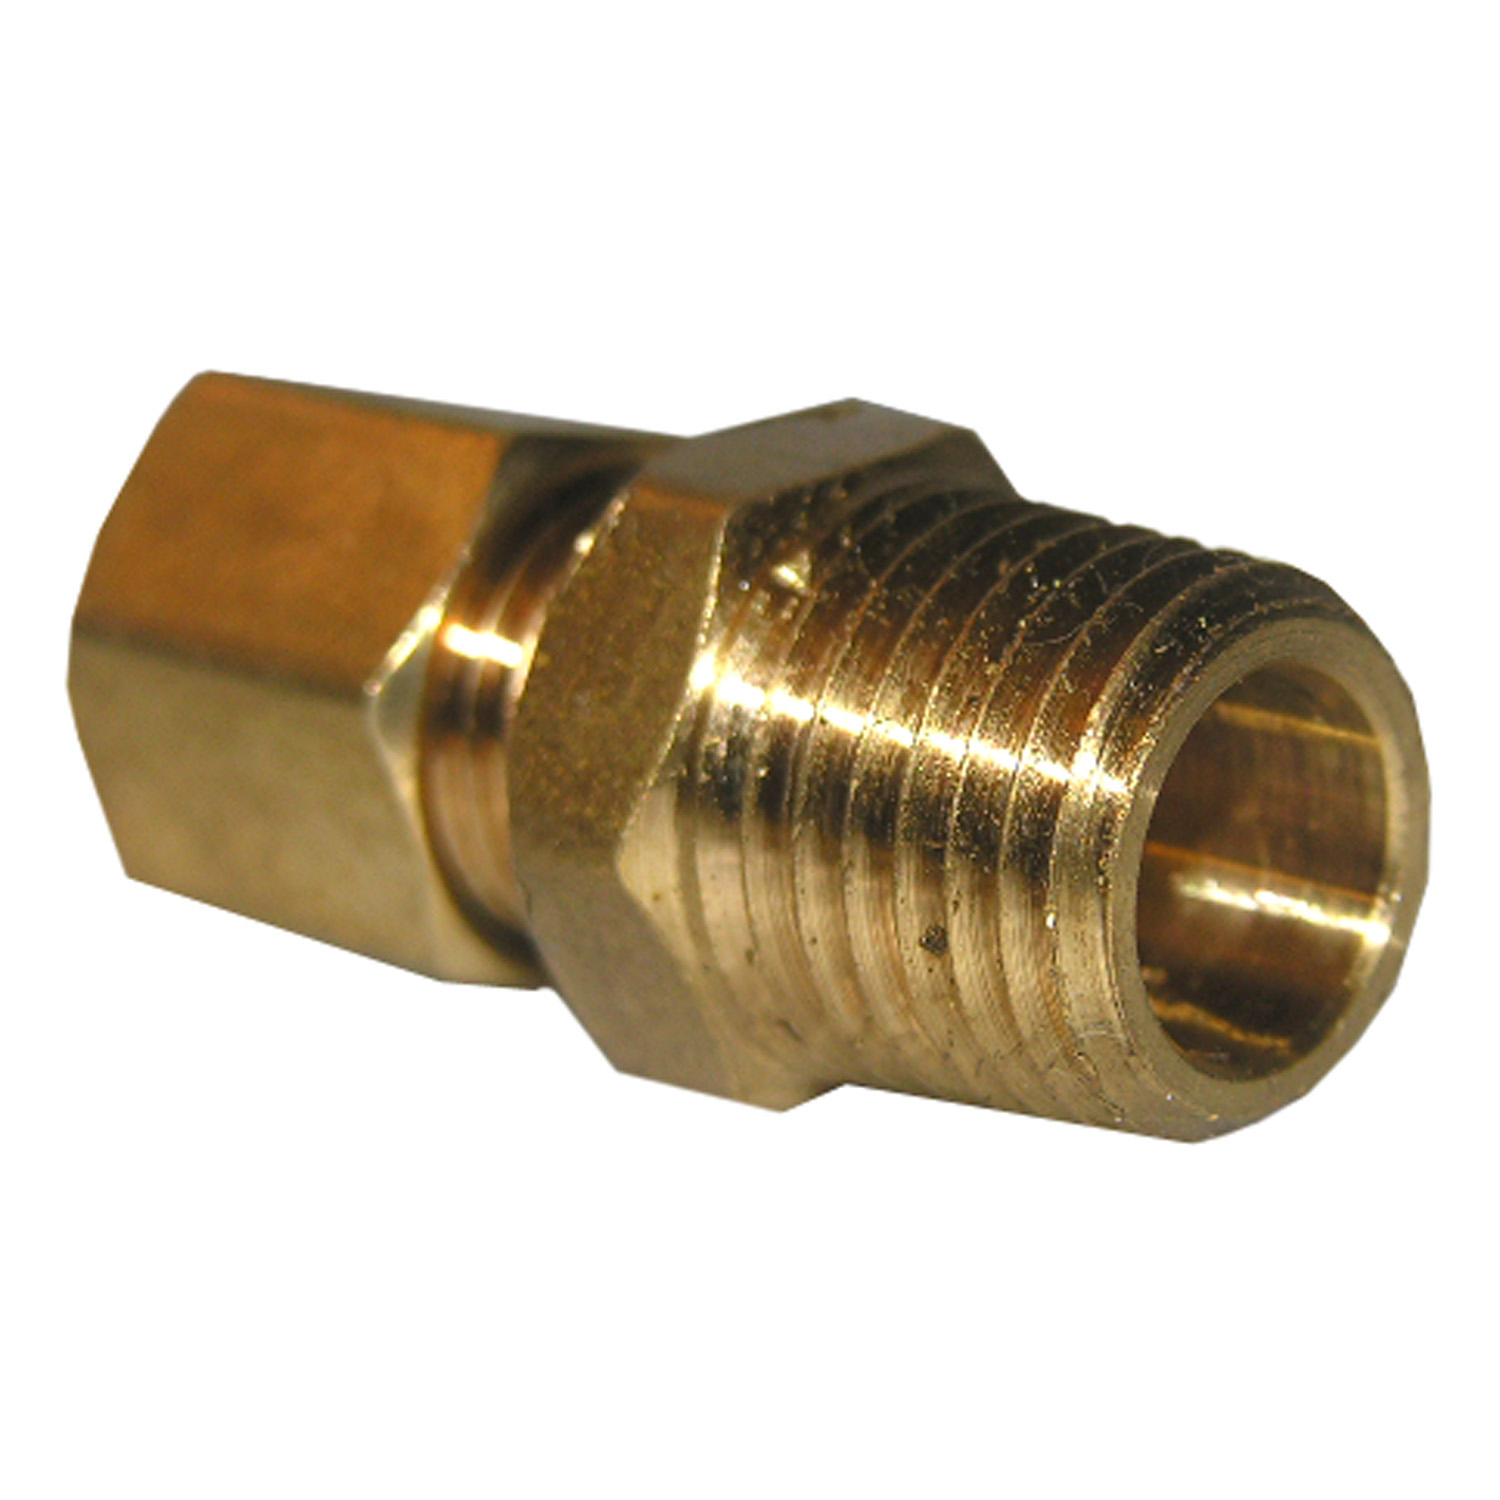 17-6813 Pipe Adapter, 1/4 in, Compression x MPT, Brass, 150 psi Pressure